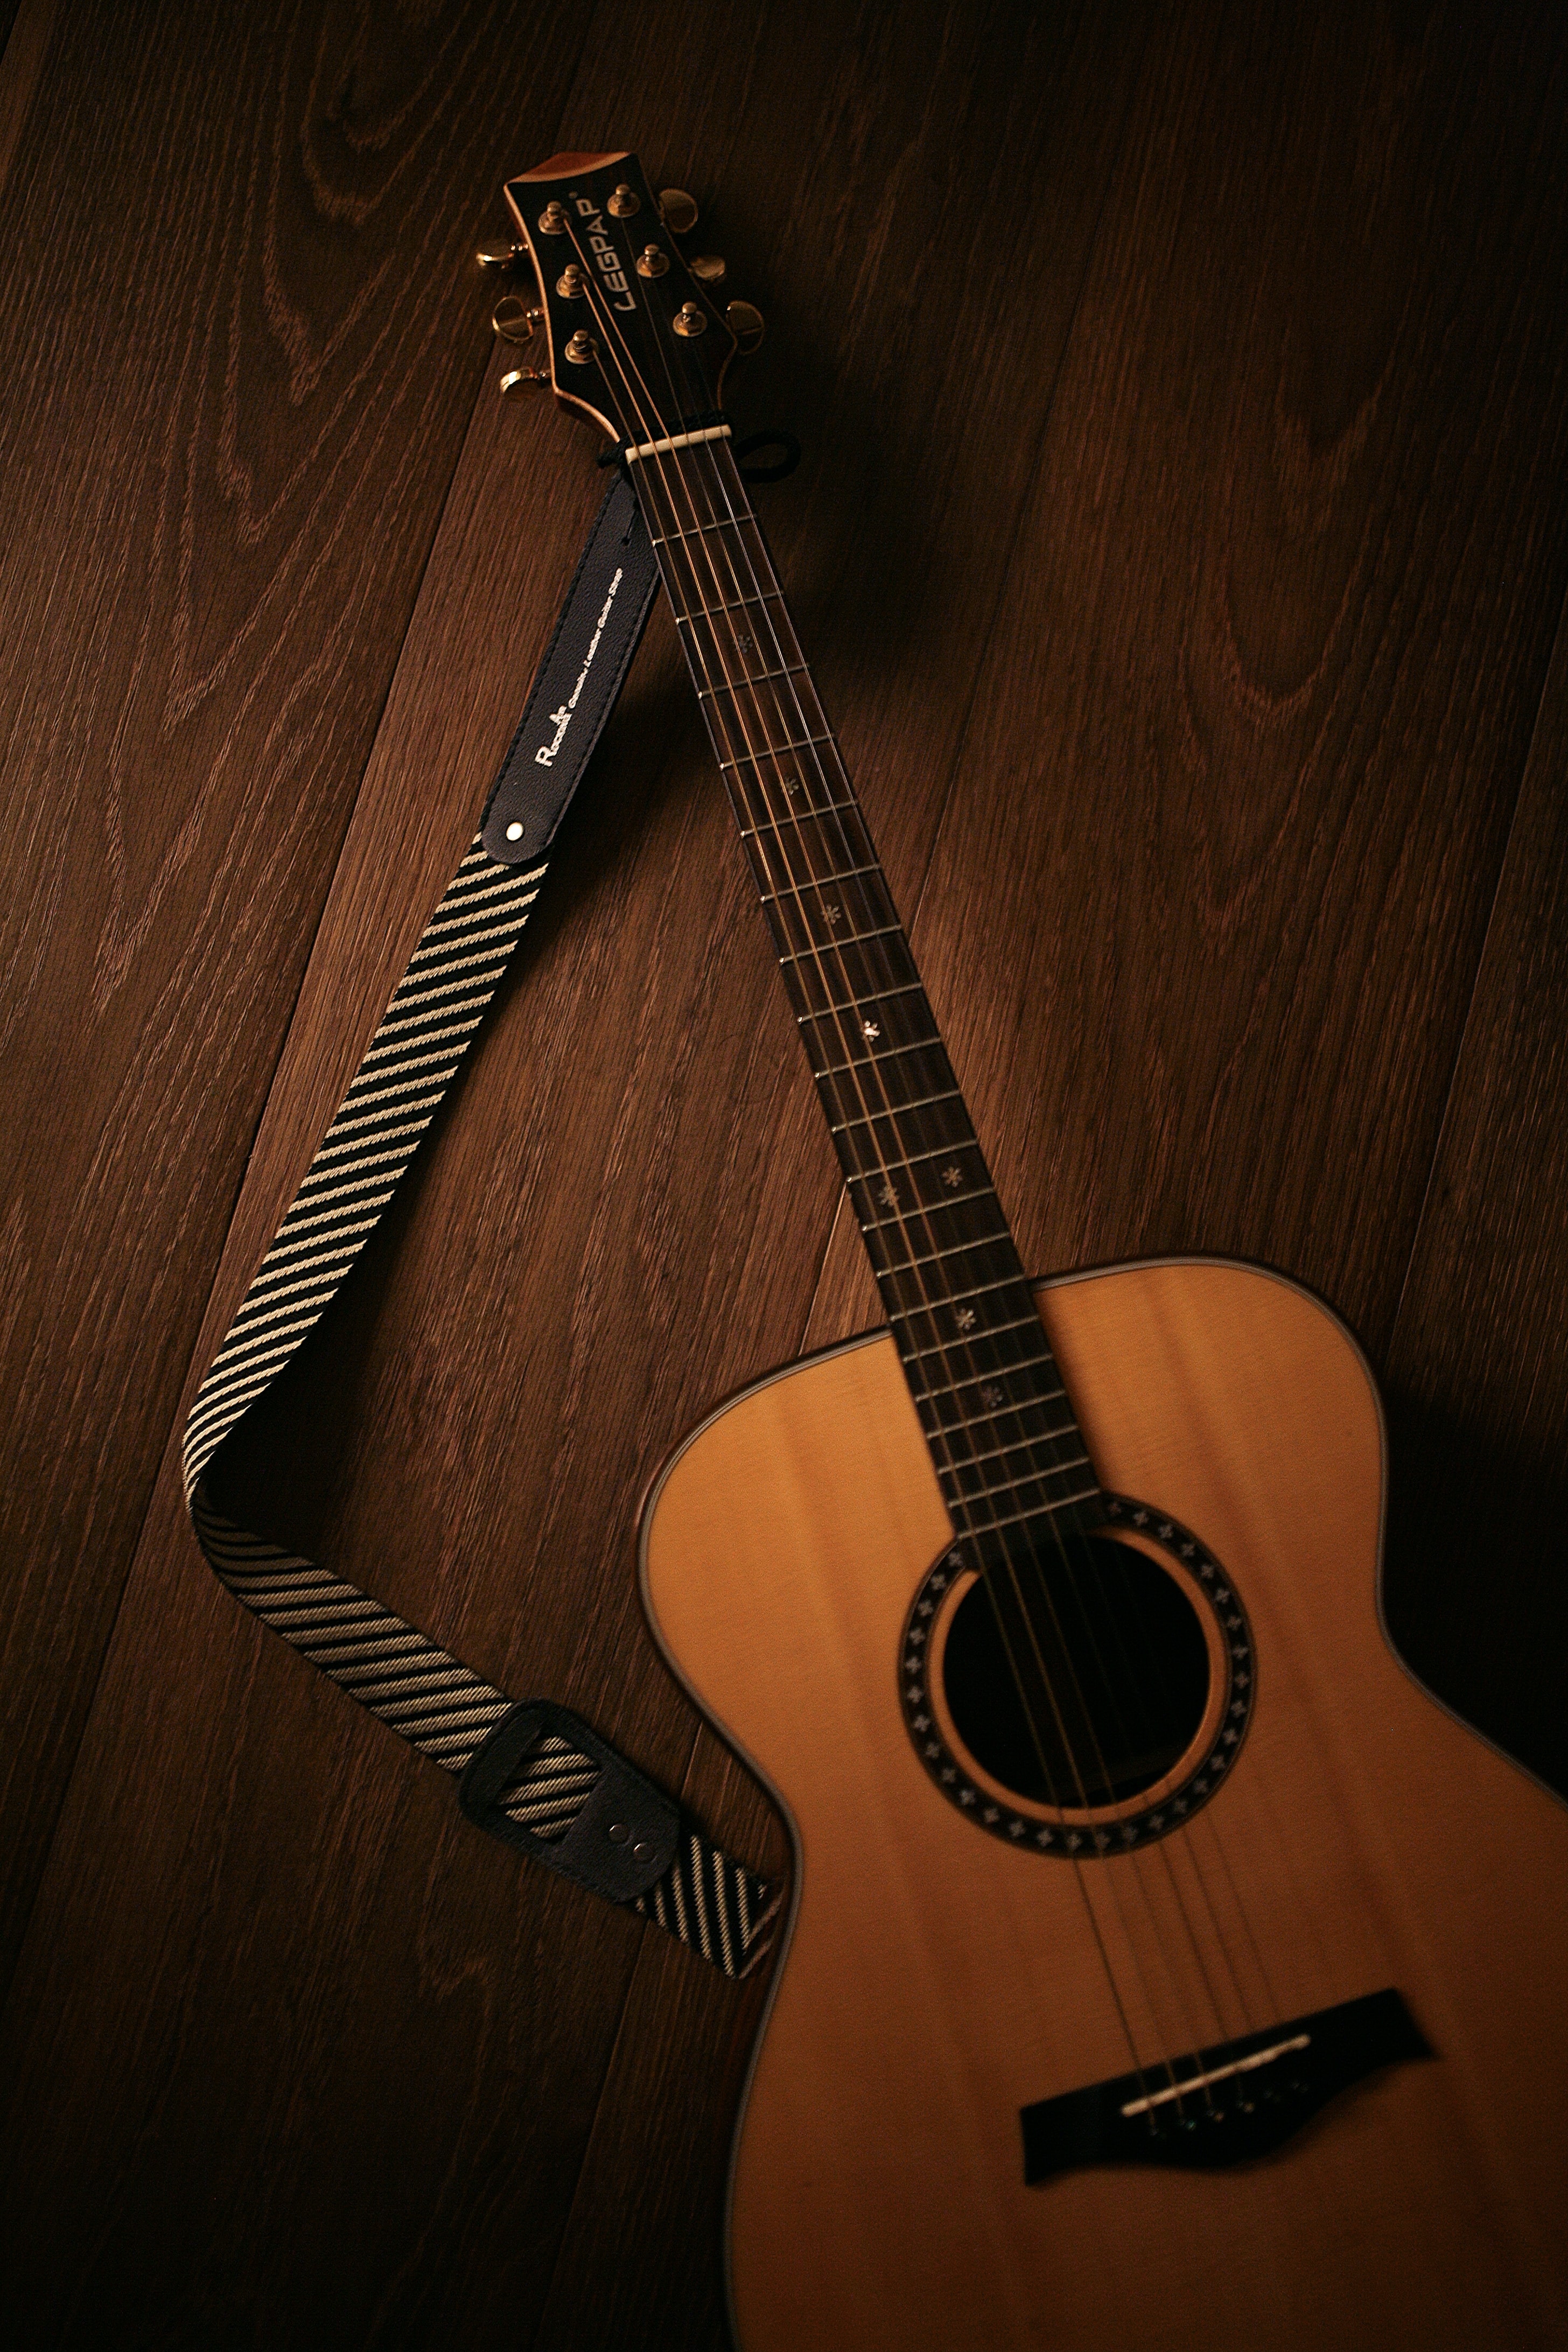 music, guitar, acoustic guitar, brown, musical instrument, wood, wooden